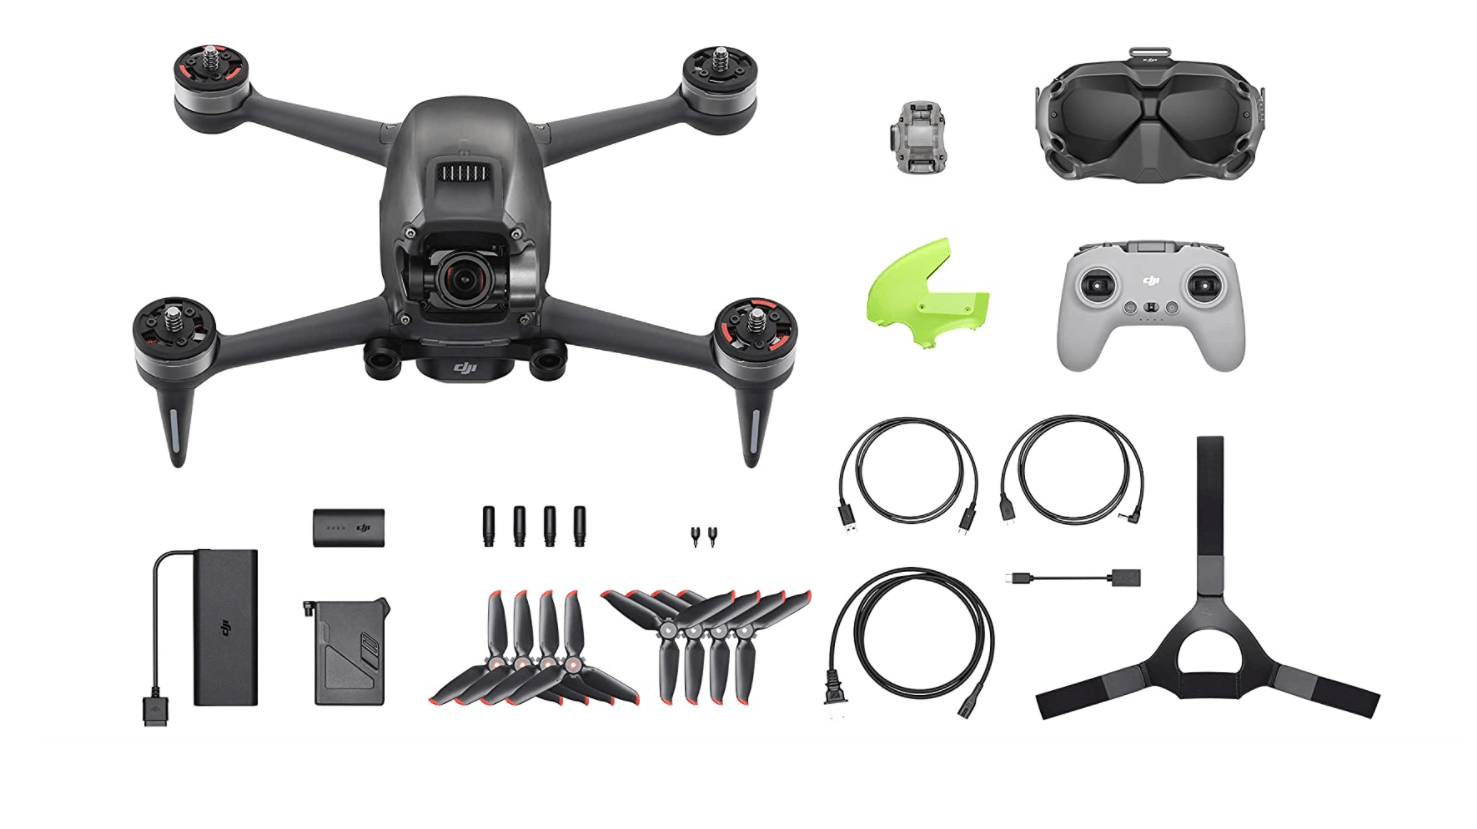 DJI FPV Drone Flying Mode specifications